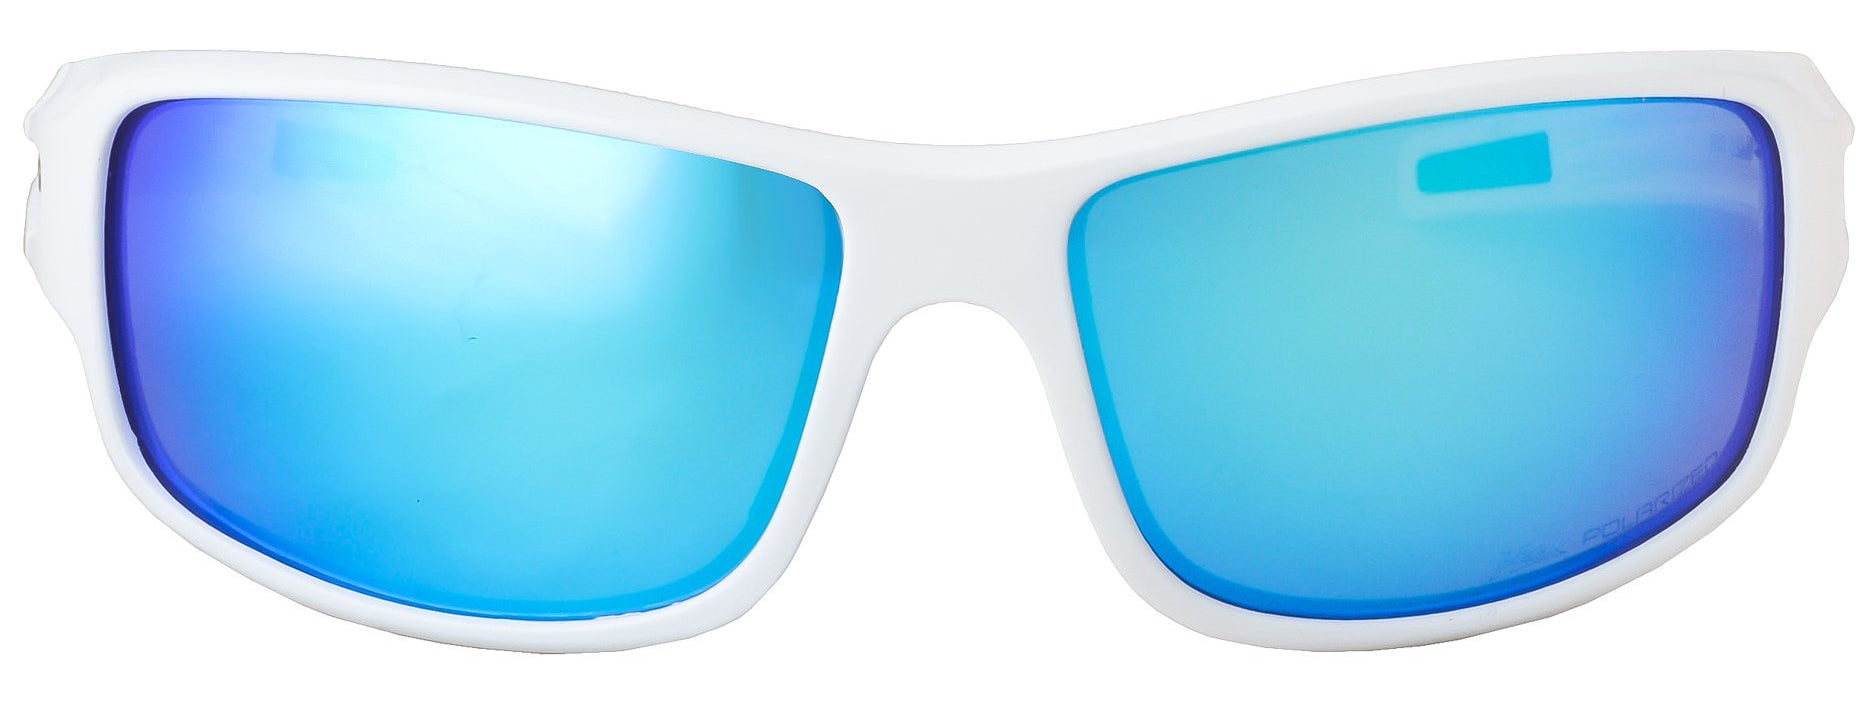 Second image: HZ Series Arkana - Premium Polarized Sunglasses by Hornz - Matte Gun Metal Grey Frame - Blue Ice Mirror Lens